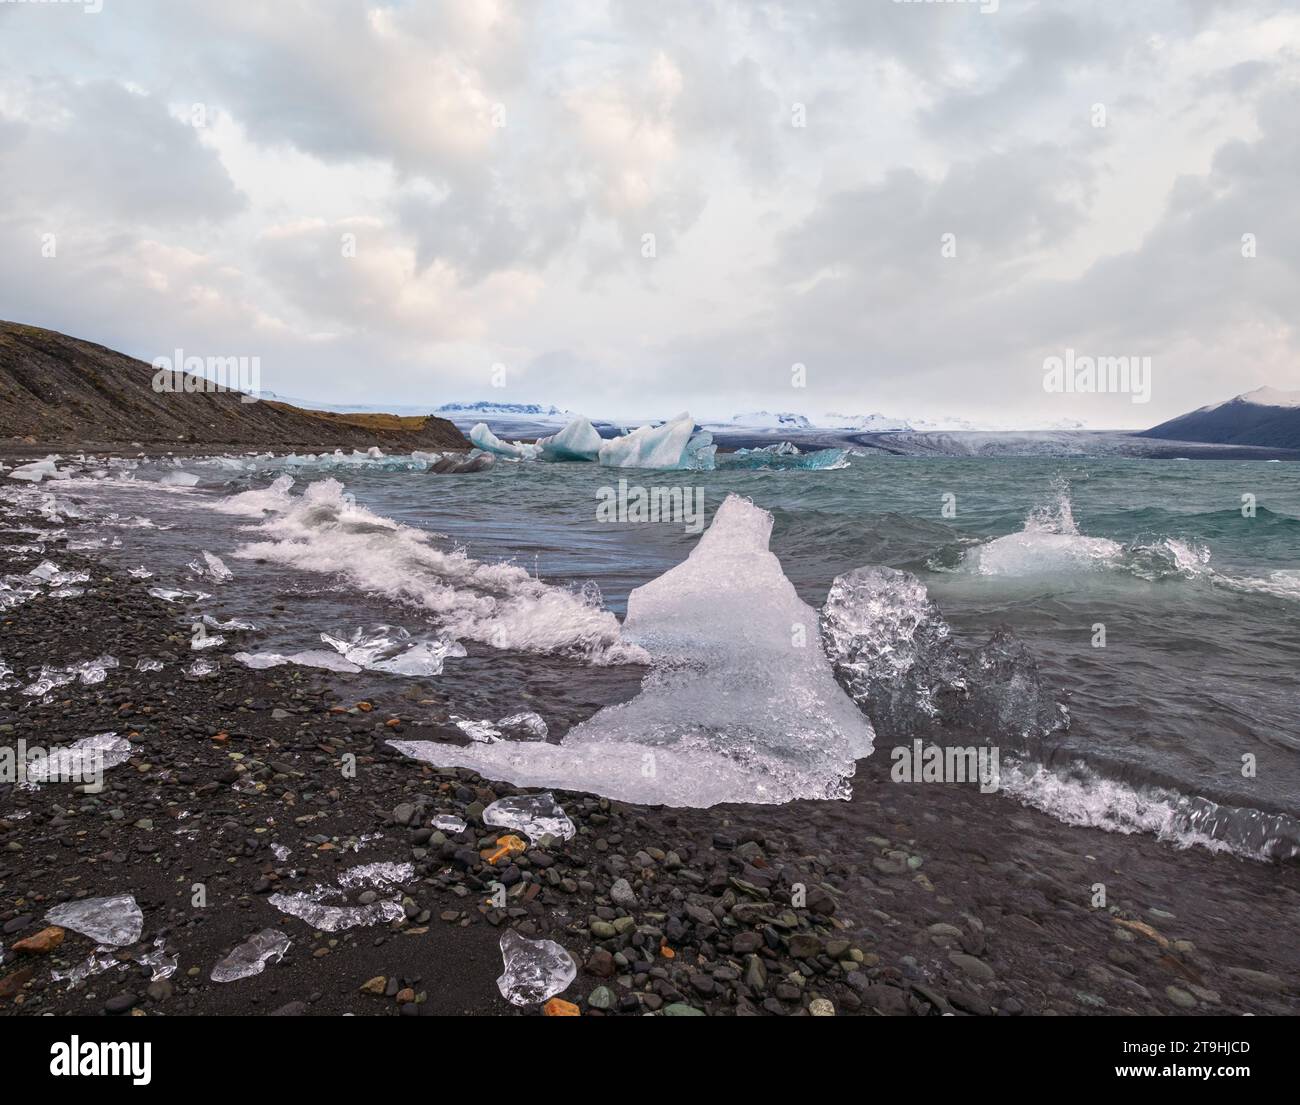 Jokulsarlon glacial lake, lagoon with ice blocks, Iceland. Situated near the edge of the Atlantic Ocean at the head of the Breidamerkurjokull glacier, Stock Photo